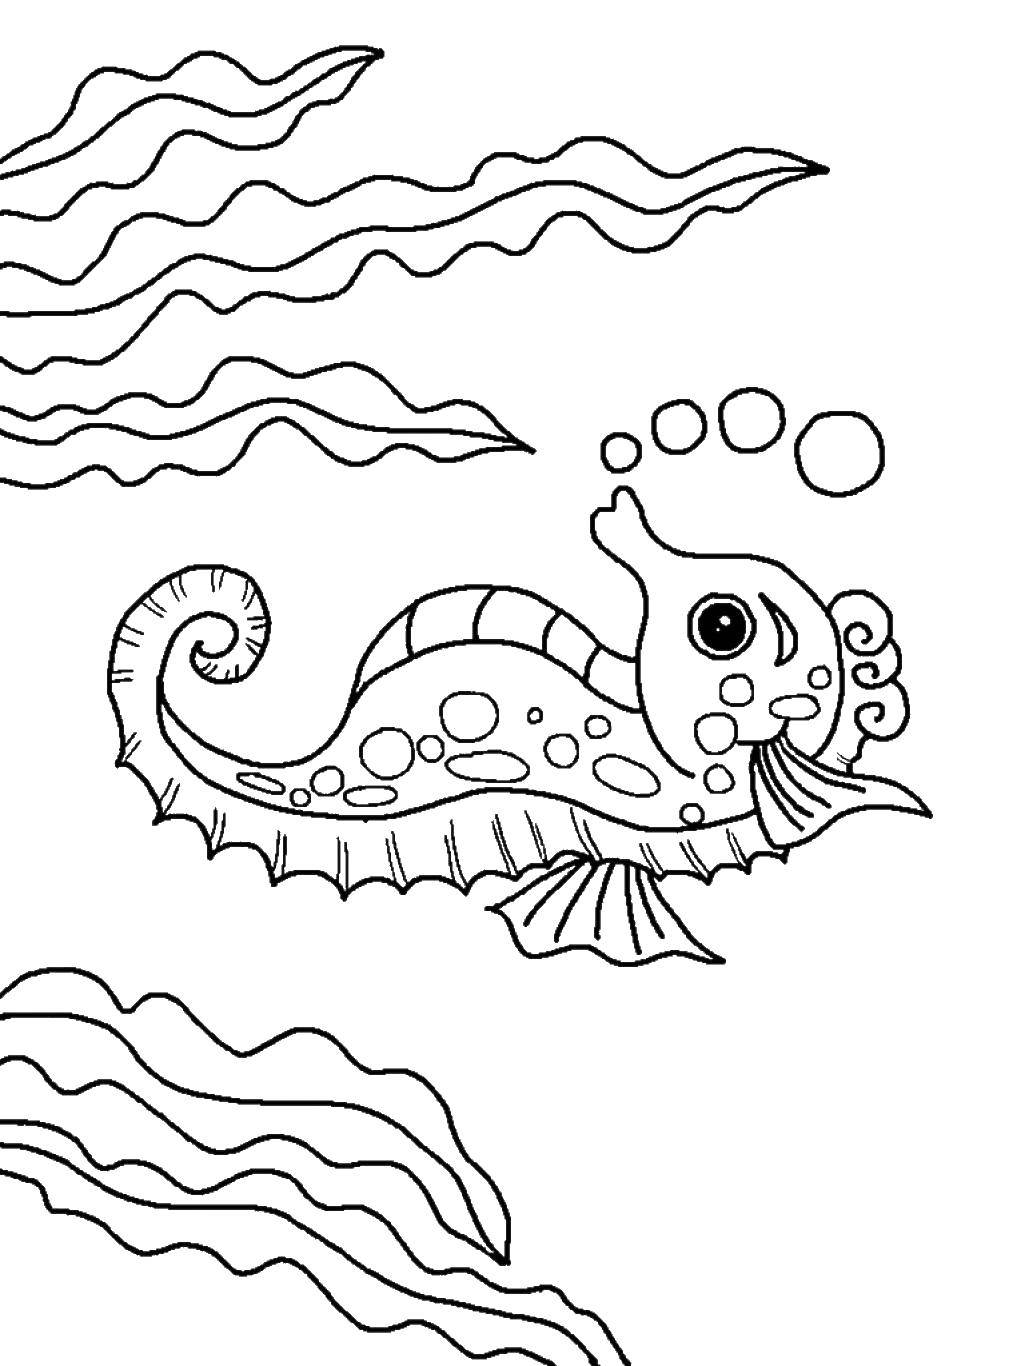 Coloring Marine konicek. Category Marine animals. Tags:  Underwater world, seahorses.